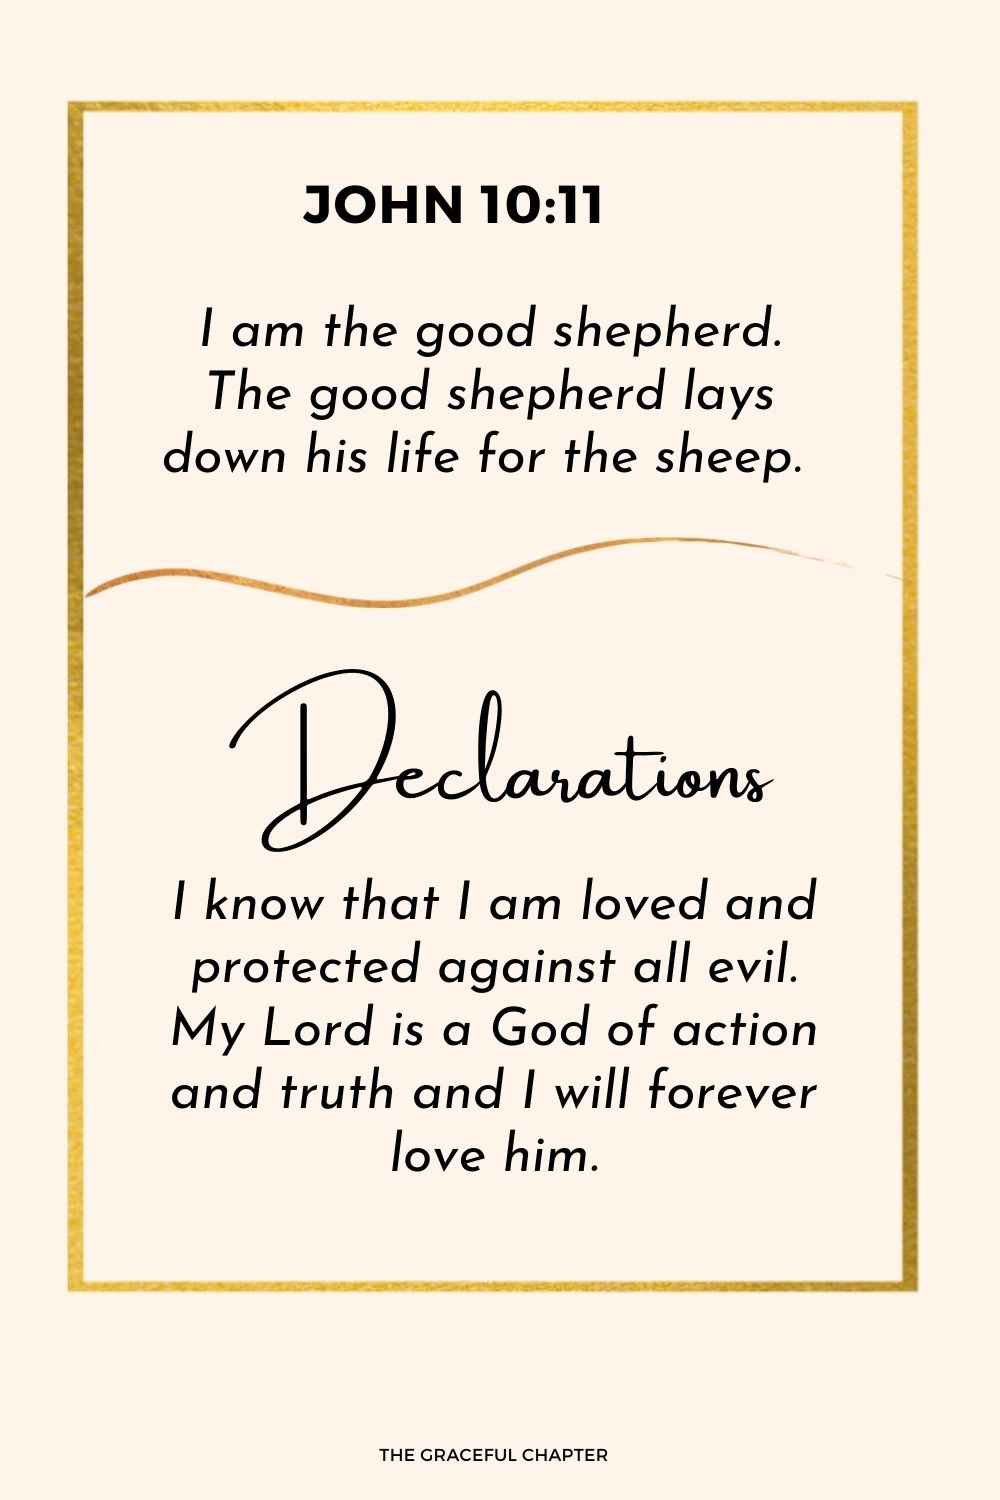 Declaration-John 10:11